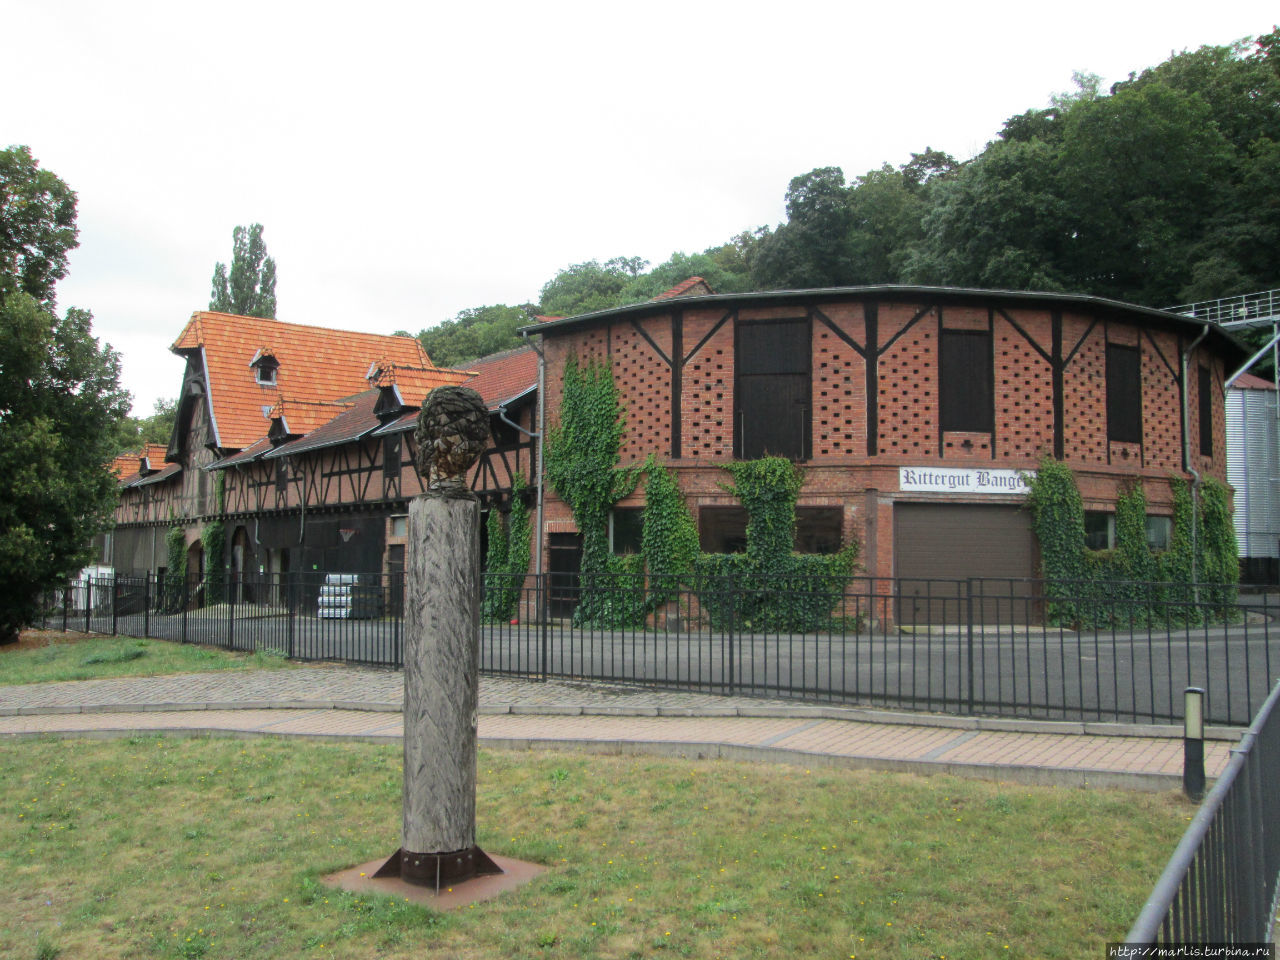 Хозяйство Бангерт. Музей в дворцовом парке / Rittergut Bangert. Schloßparkmuseum